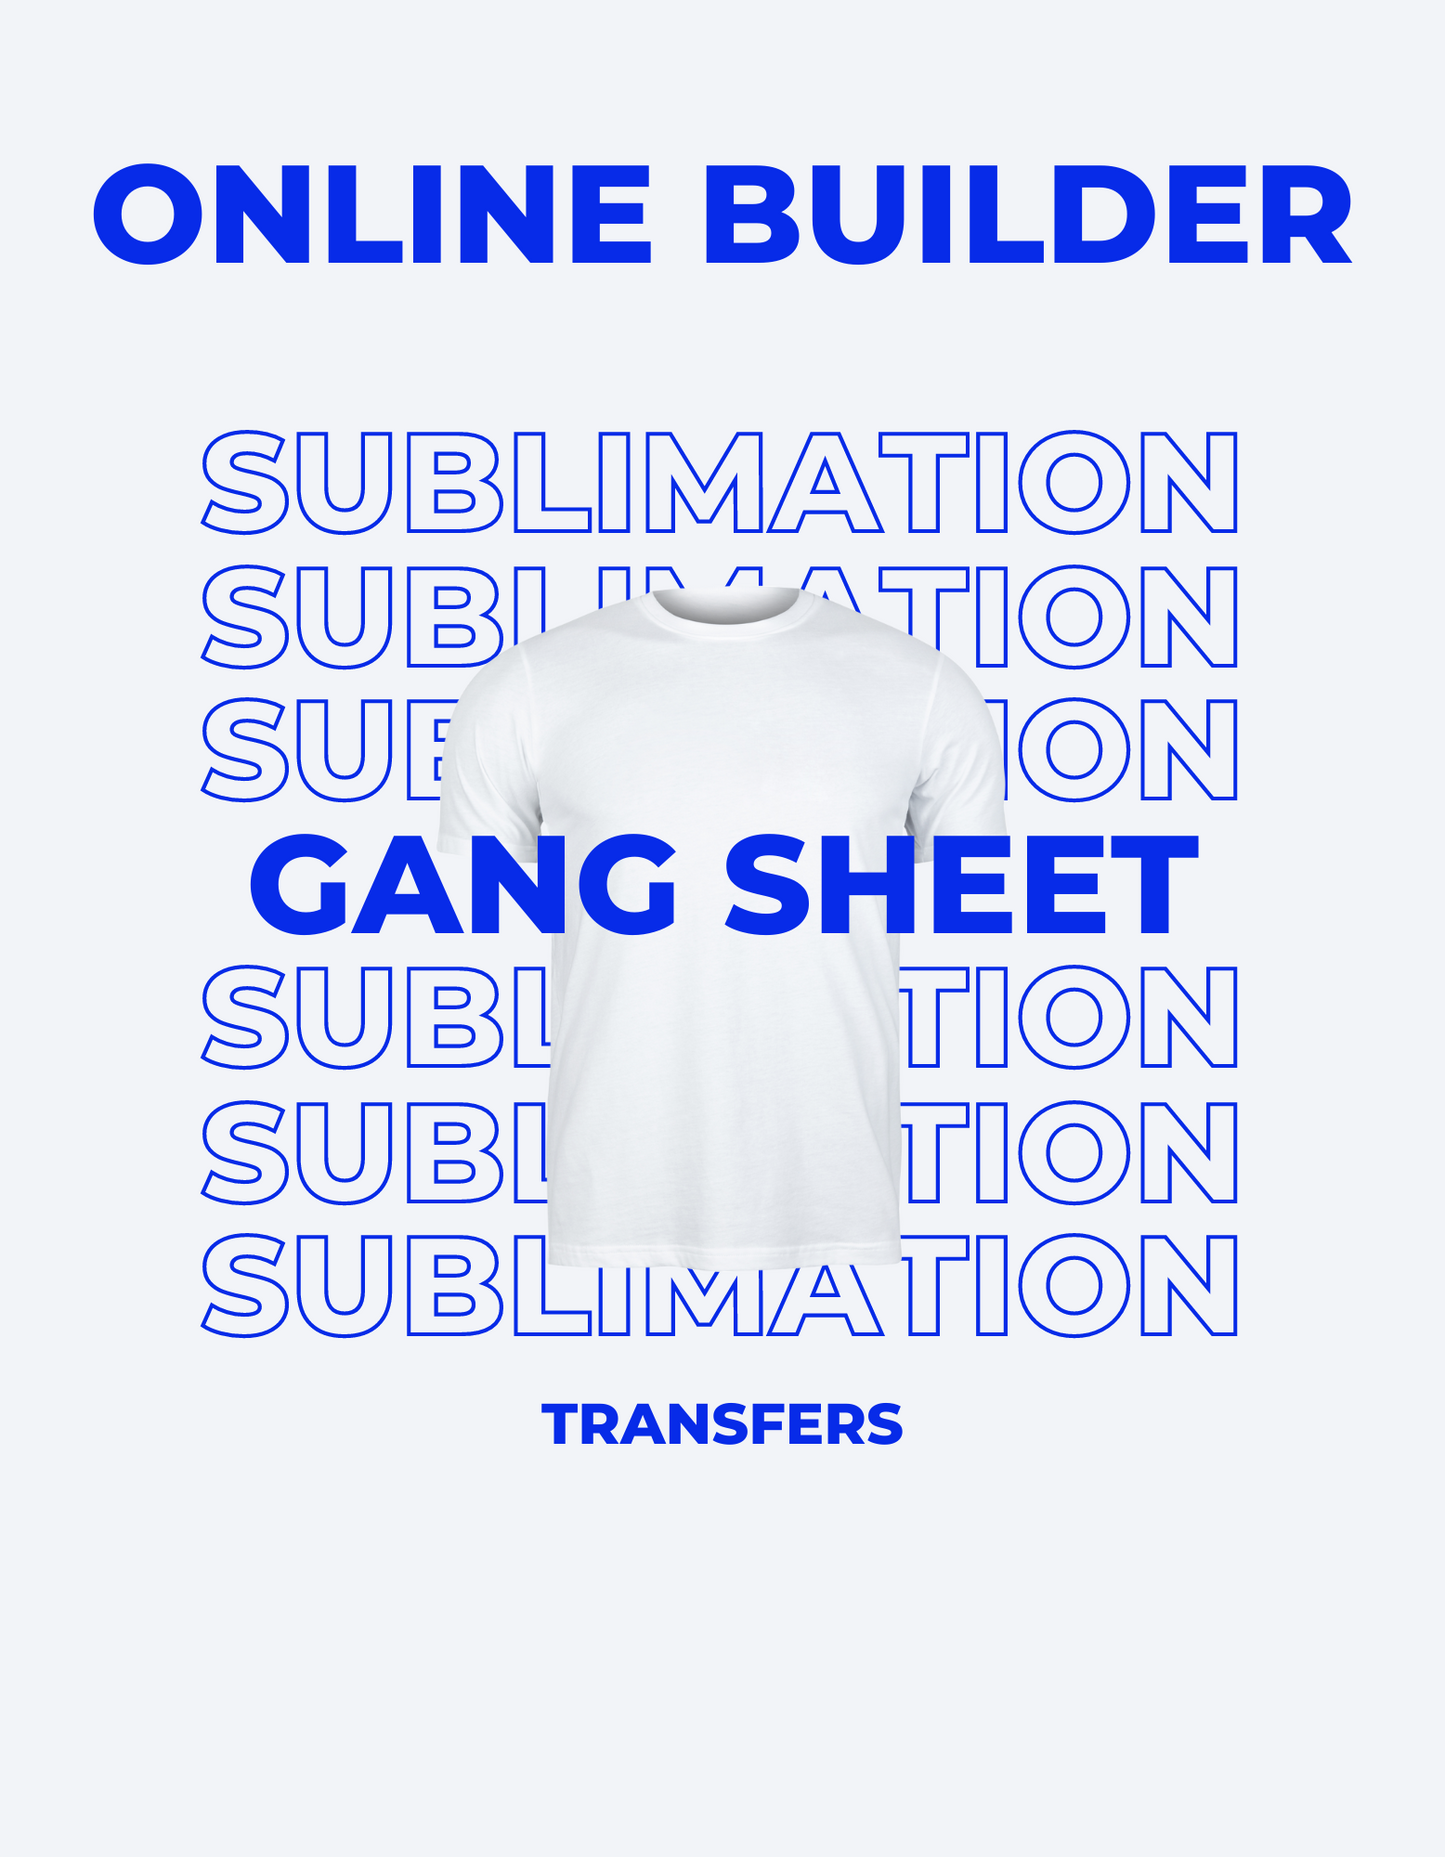 Gang Sheet Sublimation Transfers - Online Builder